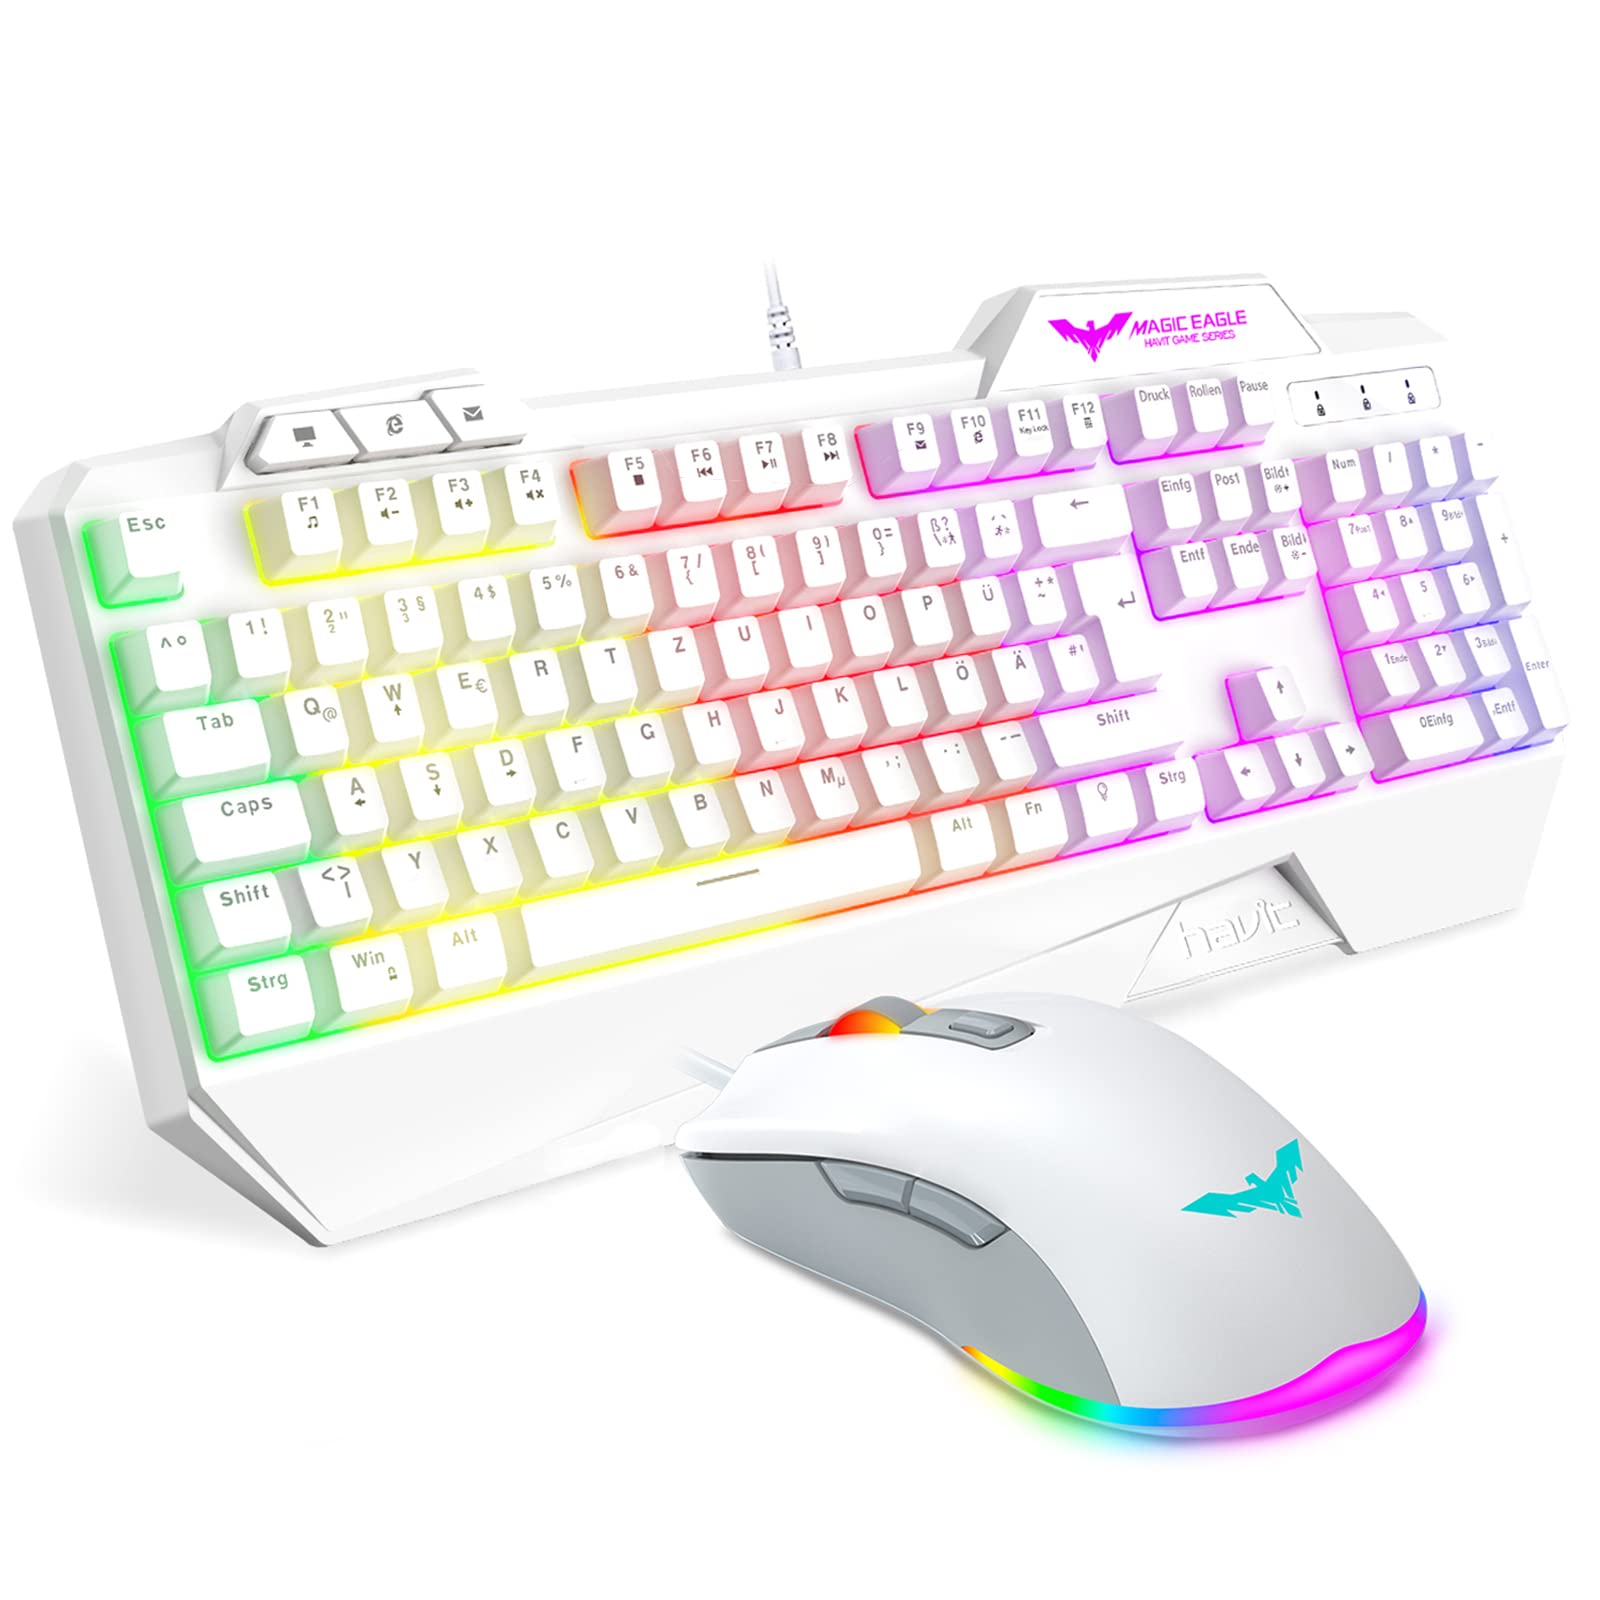 Book Cover havit Keyboard Rainbow Backlit Wired Gaming Keyboard Mouse Combo, LED 104 Keys USB Ergonomic Wrist Rest Keyboard, 4800 DPI Mouse for PC Gamer (White)